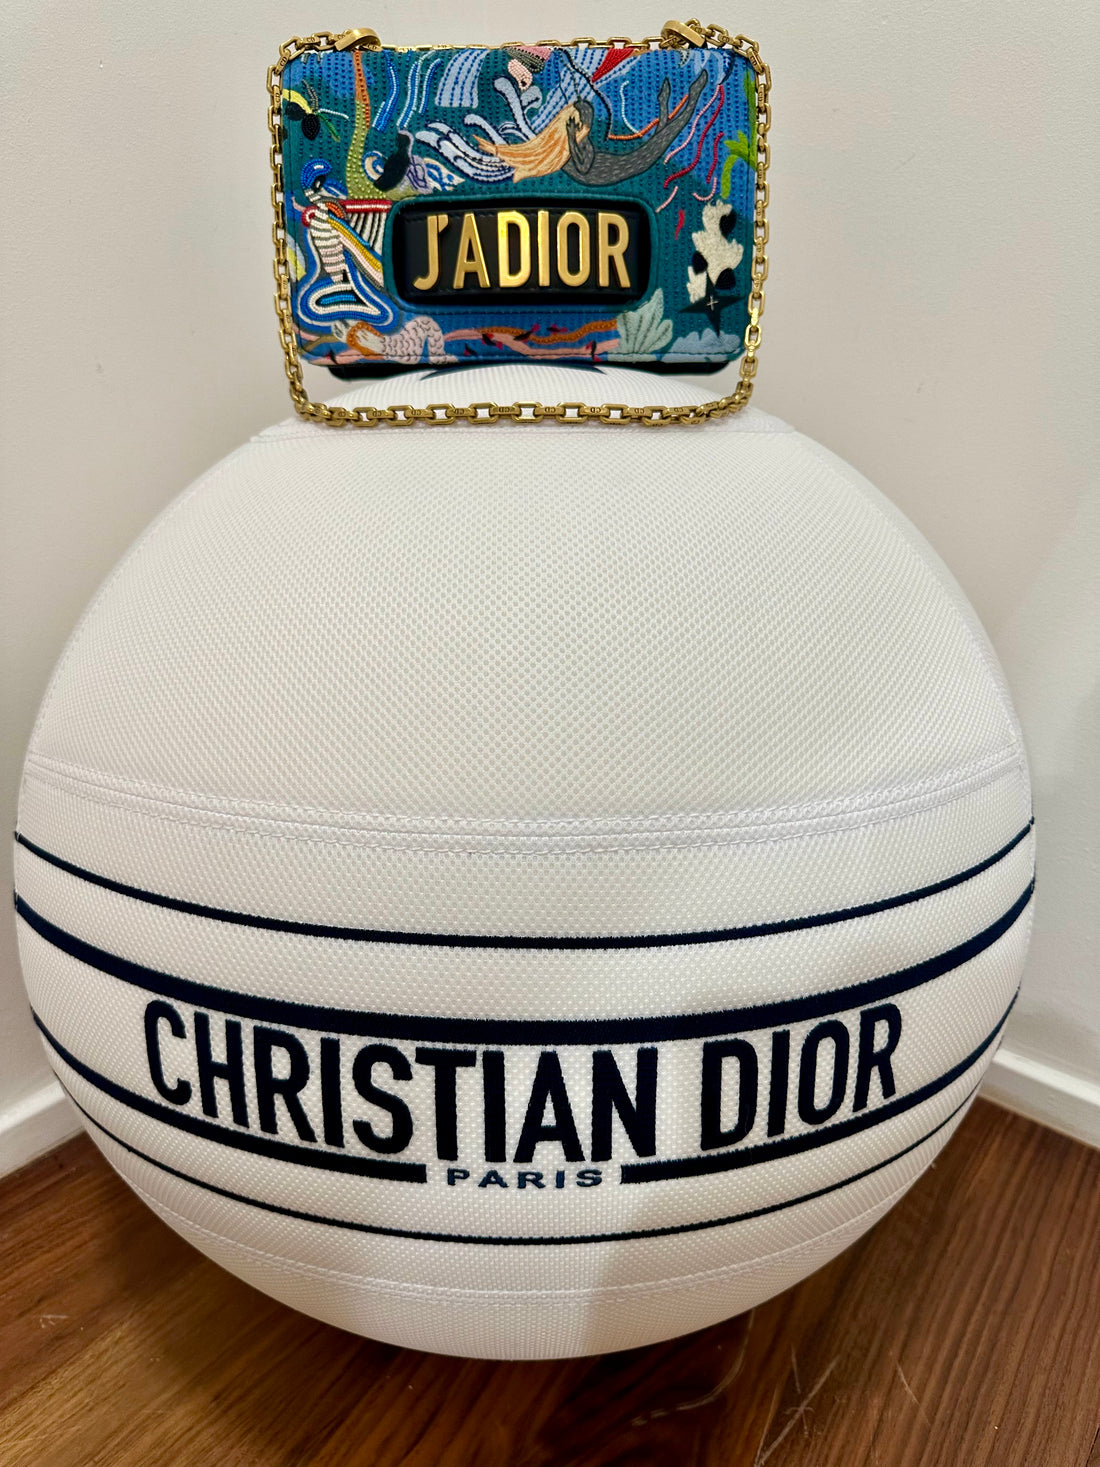 Dior - Gym ball